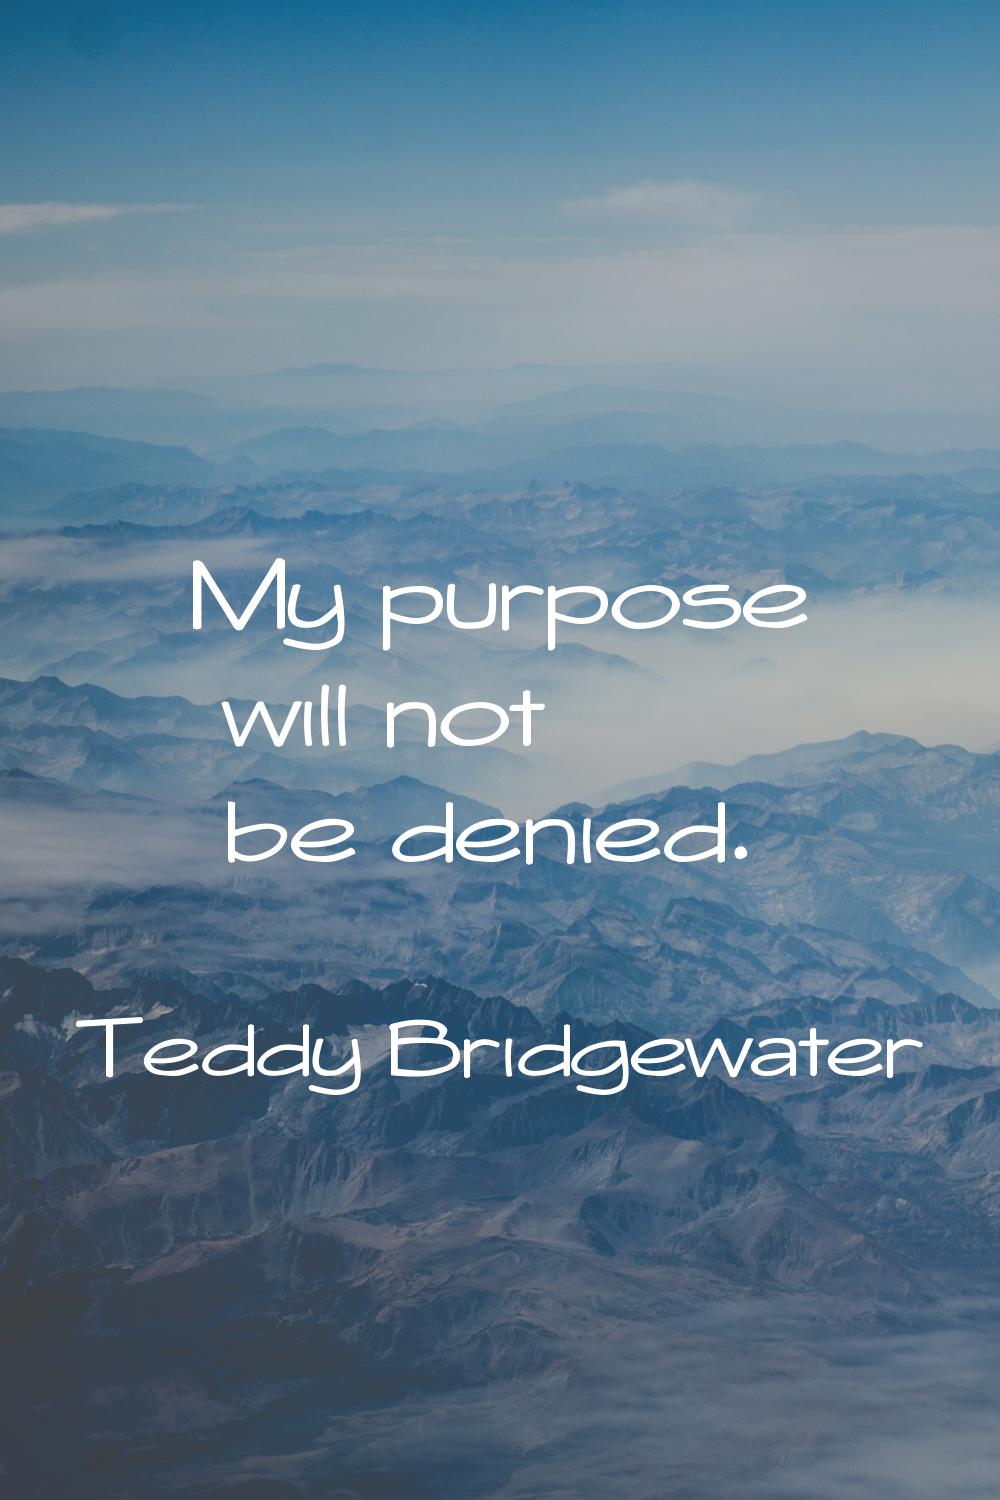 My purpose will not be denied.